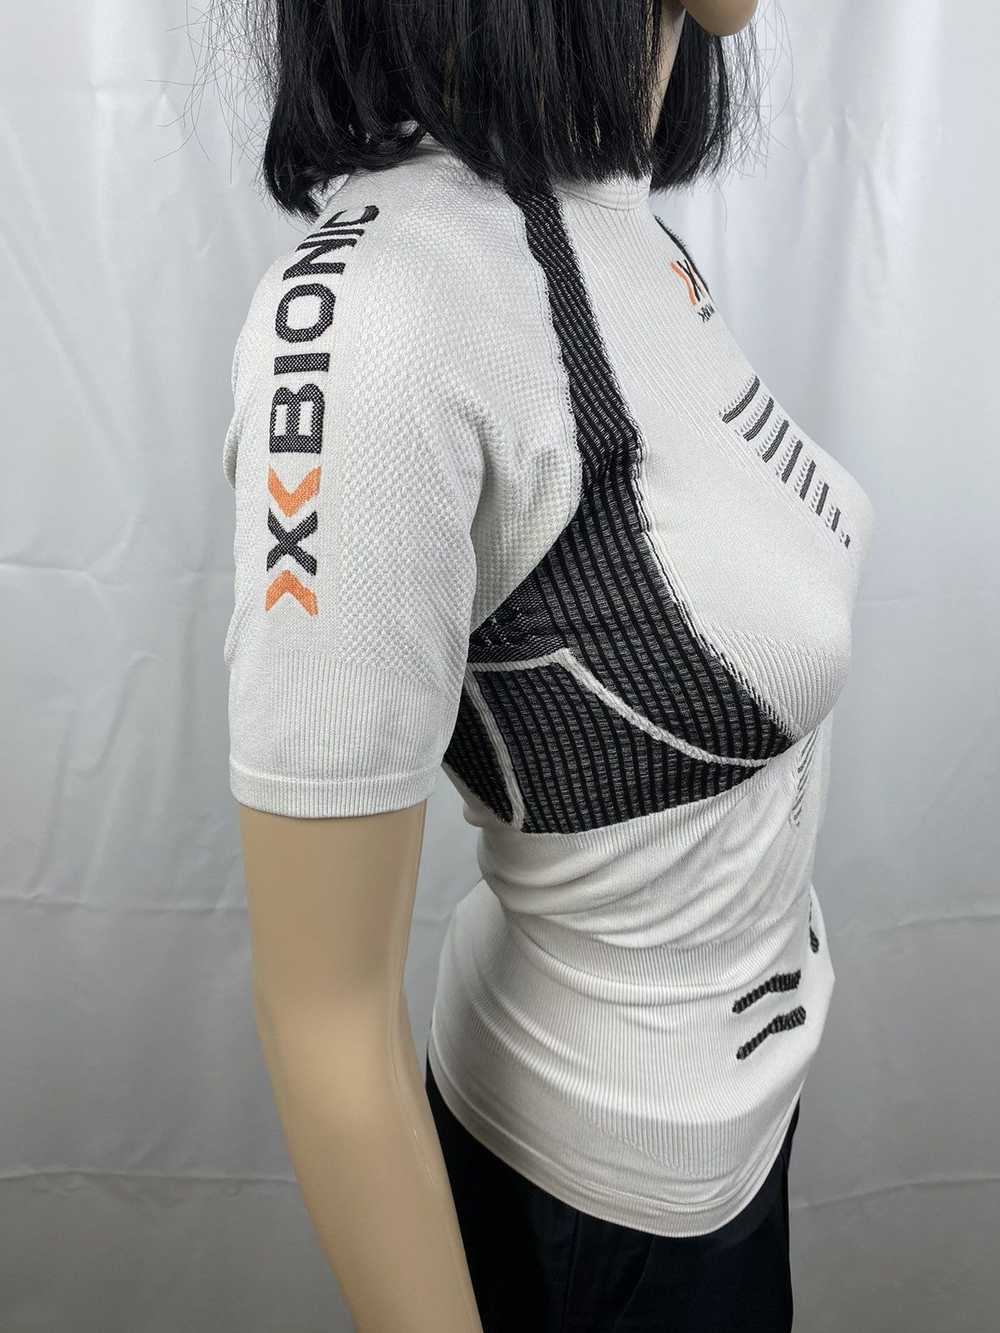 Designer X-Bionic The Trick Short Sleeve Tee Shir… - image 3